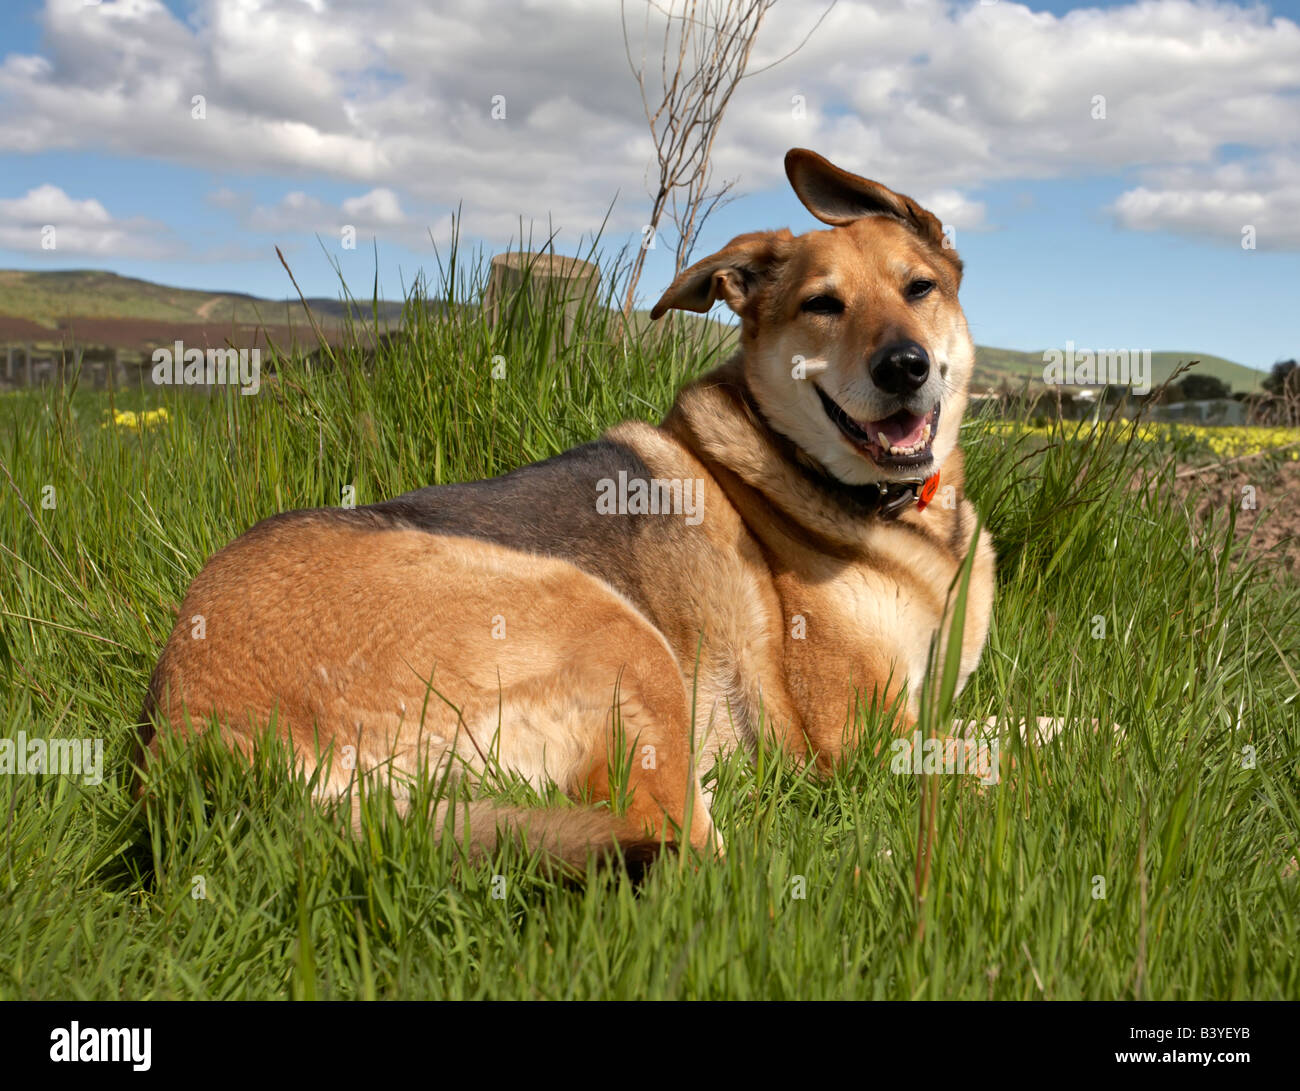 Happy Dog hills animal pet landscape travel scenic green grass Stock Photo